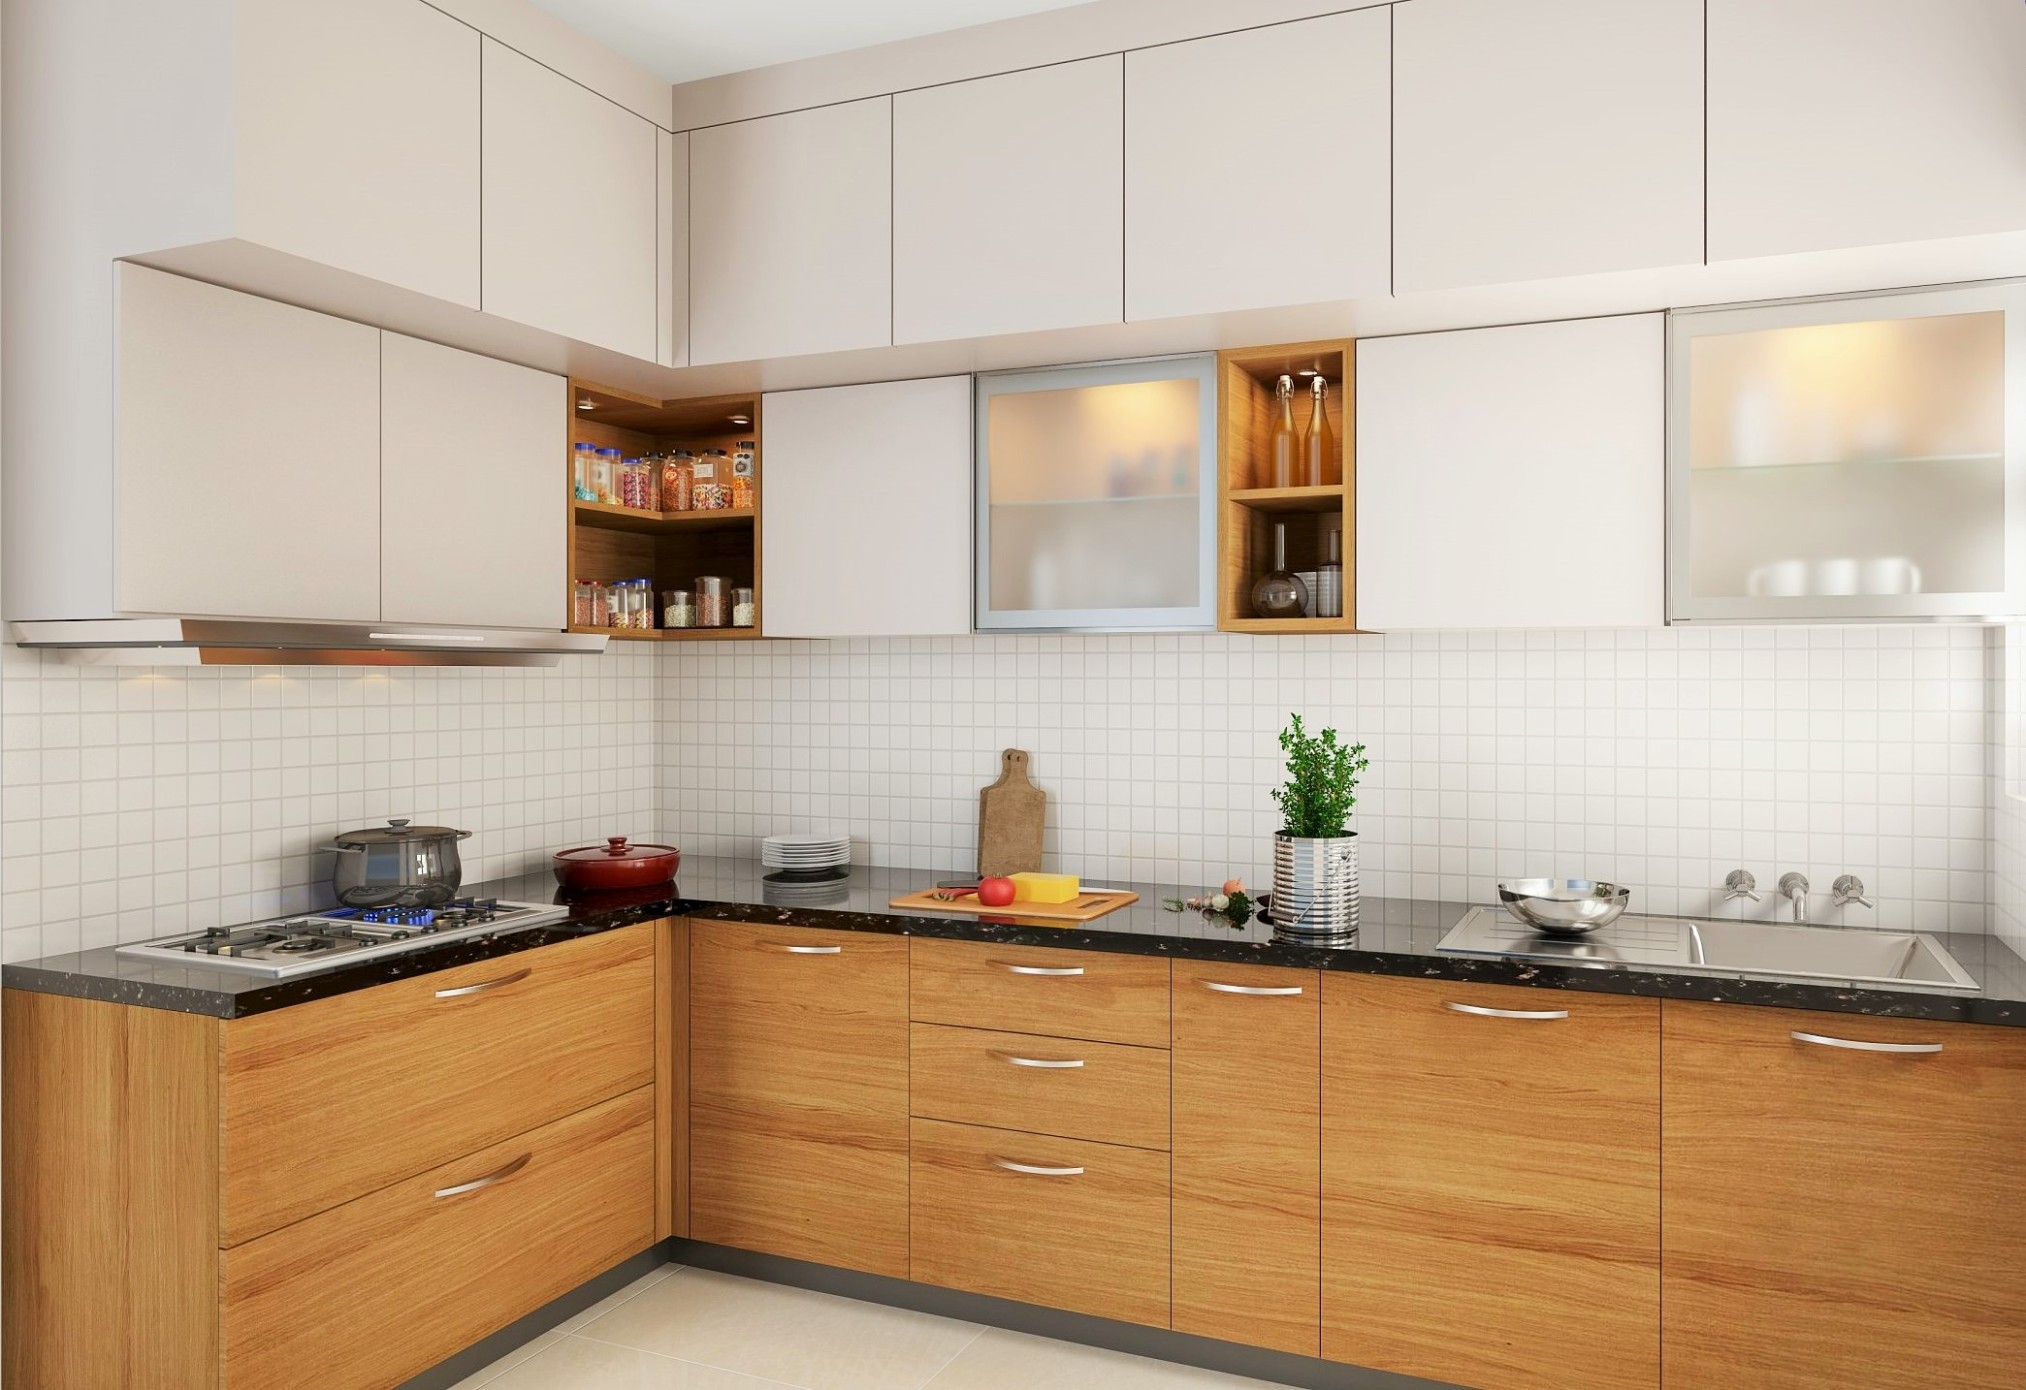 6 Small Kitchen Design Ideas That Make a Big Impact – The Urban Guide - modern kitchen design small spaces